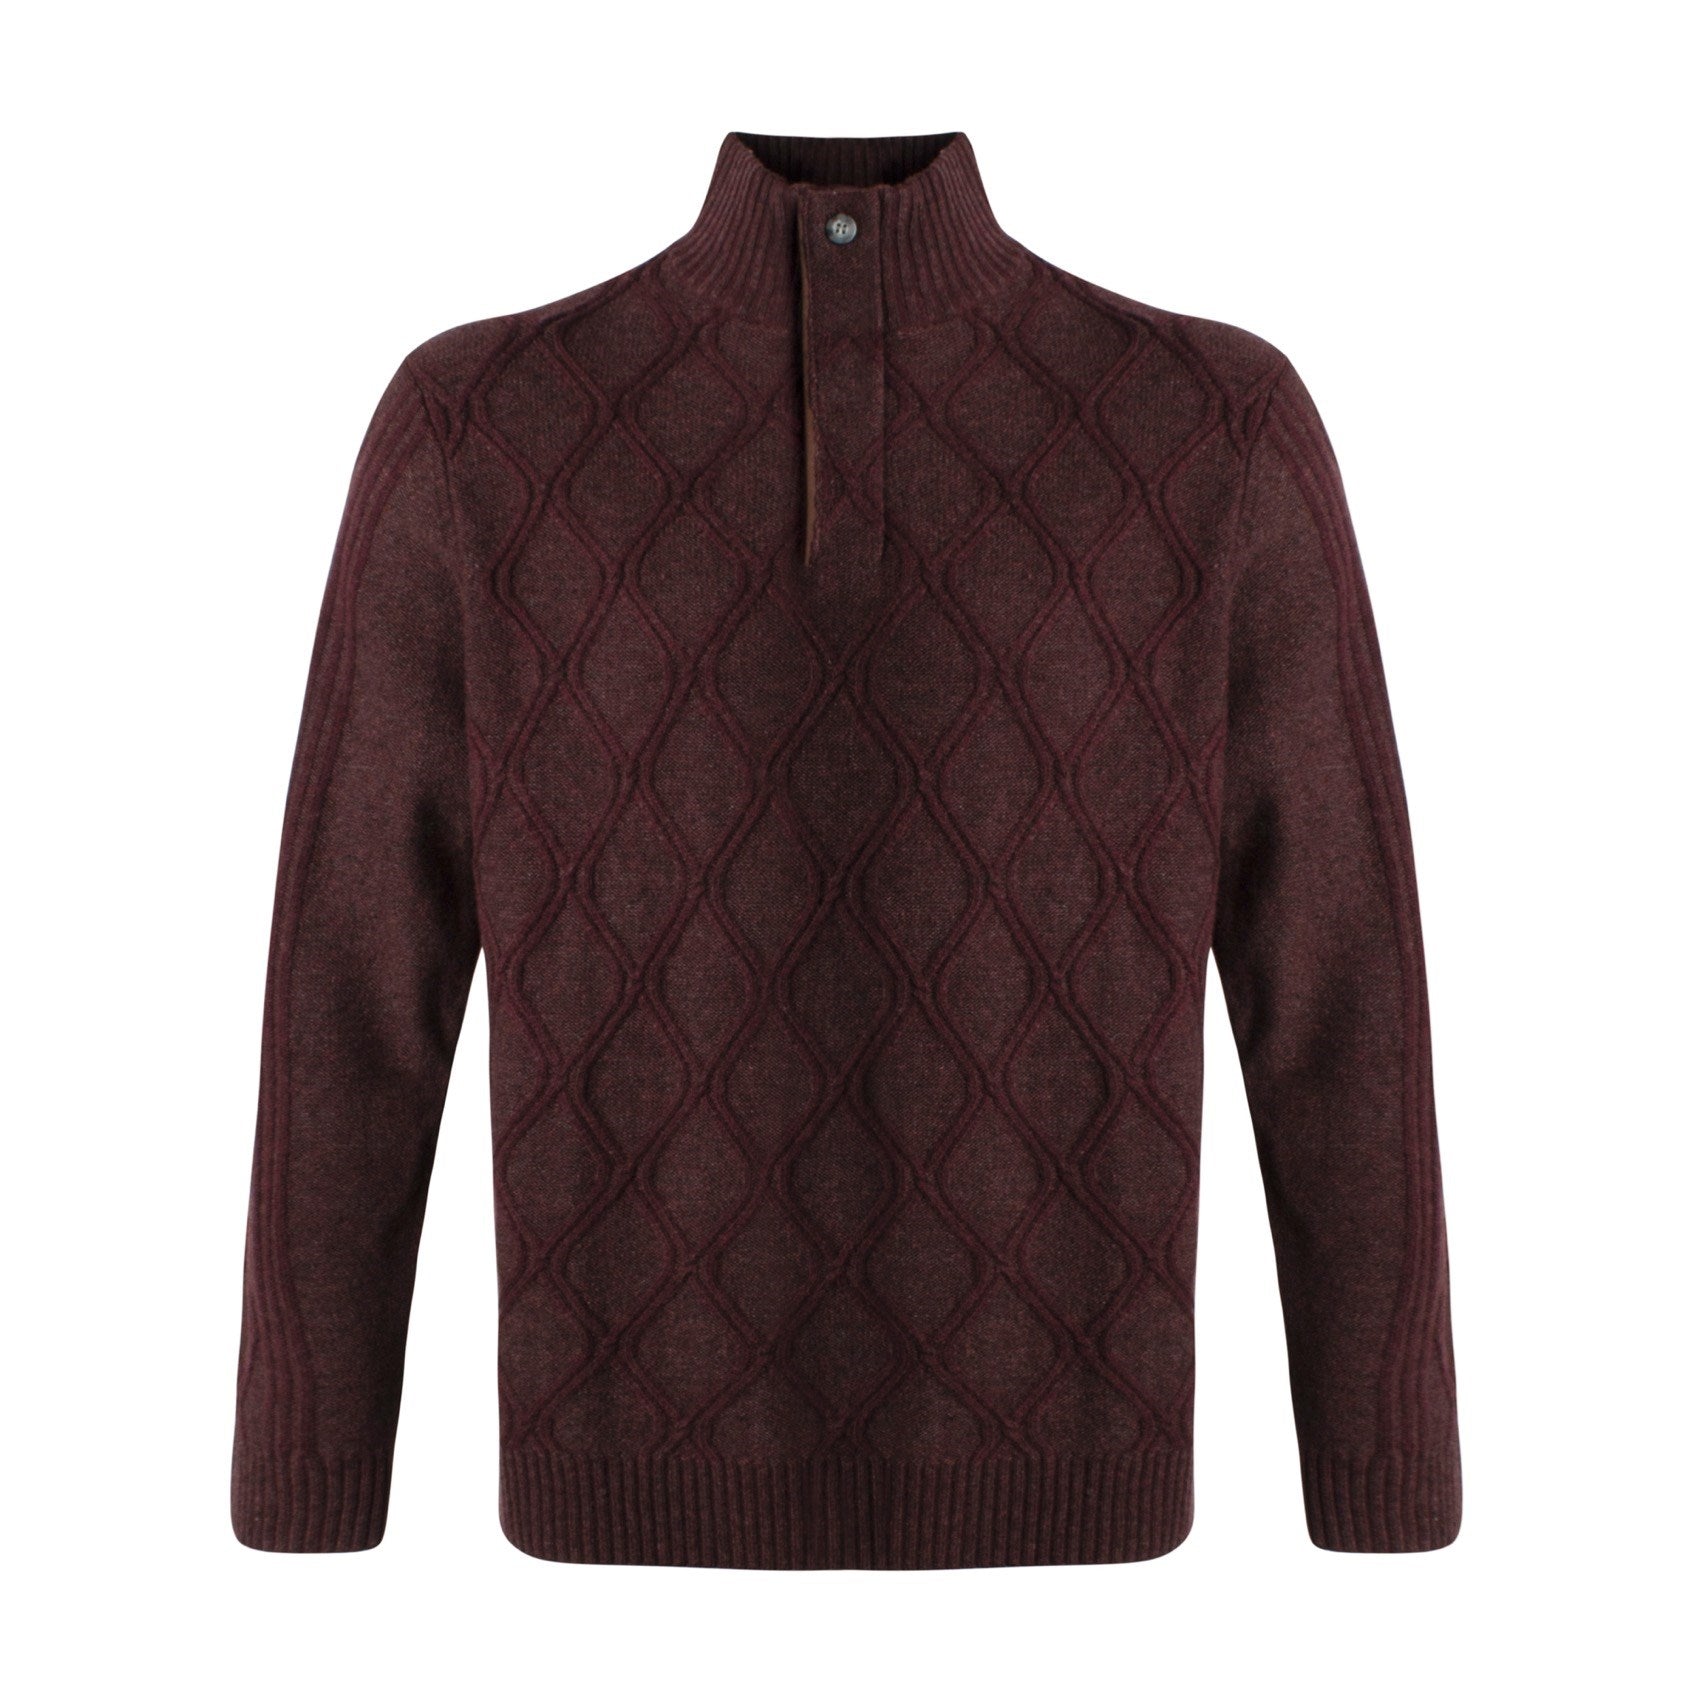 Diamond Knit Lambswool Blend Quarter-Zip Sweater in Dark Burgundy by Viyella